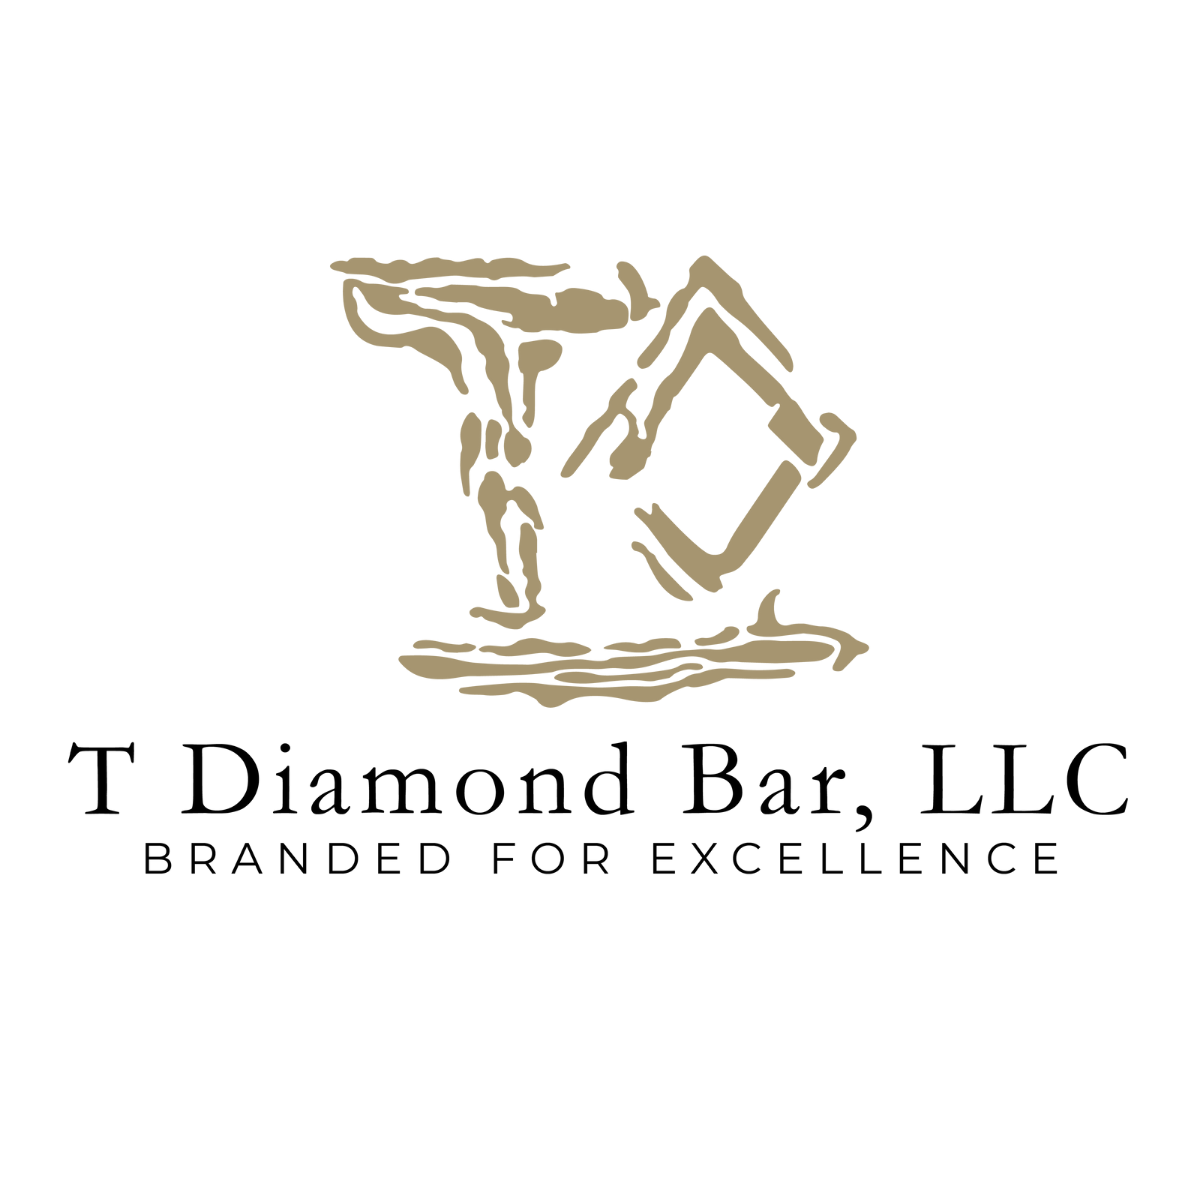 T Diamond Bar